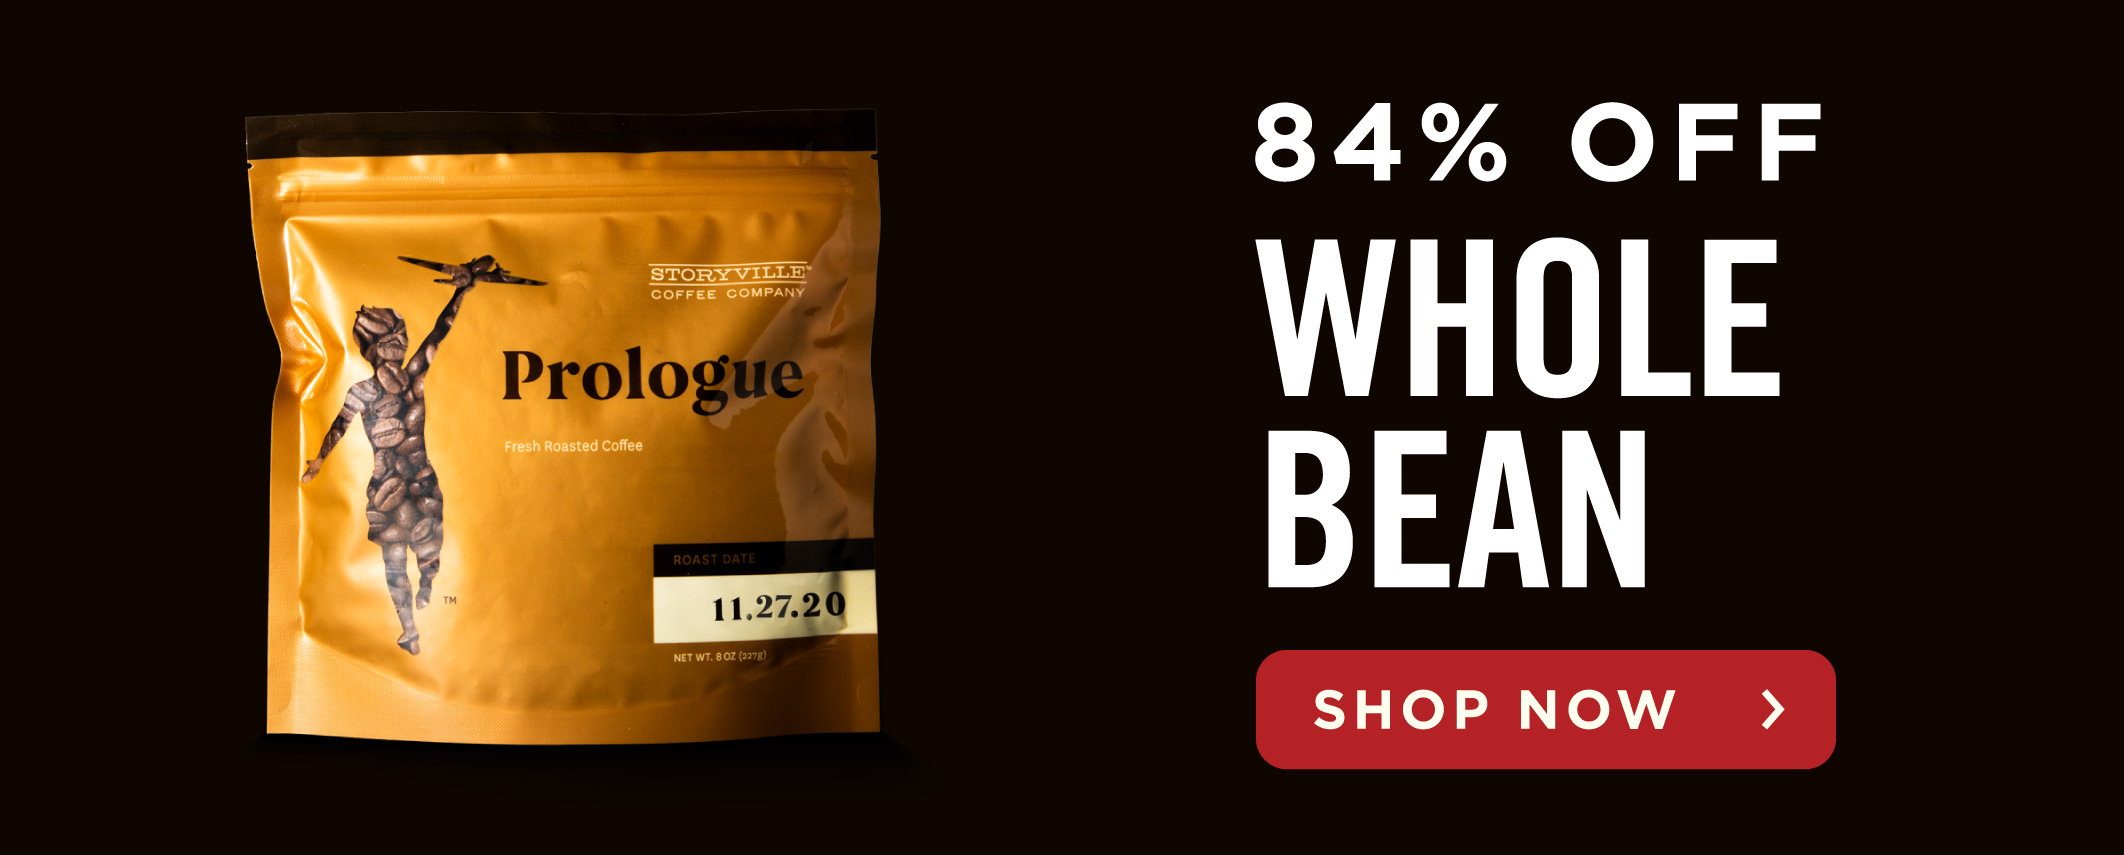 81% Off Whole Bean